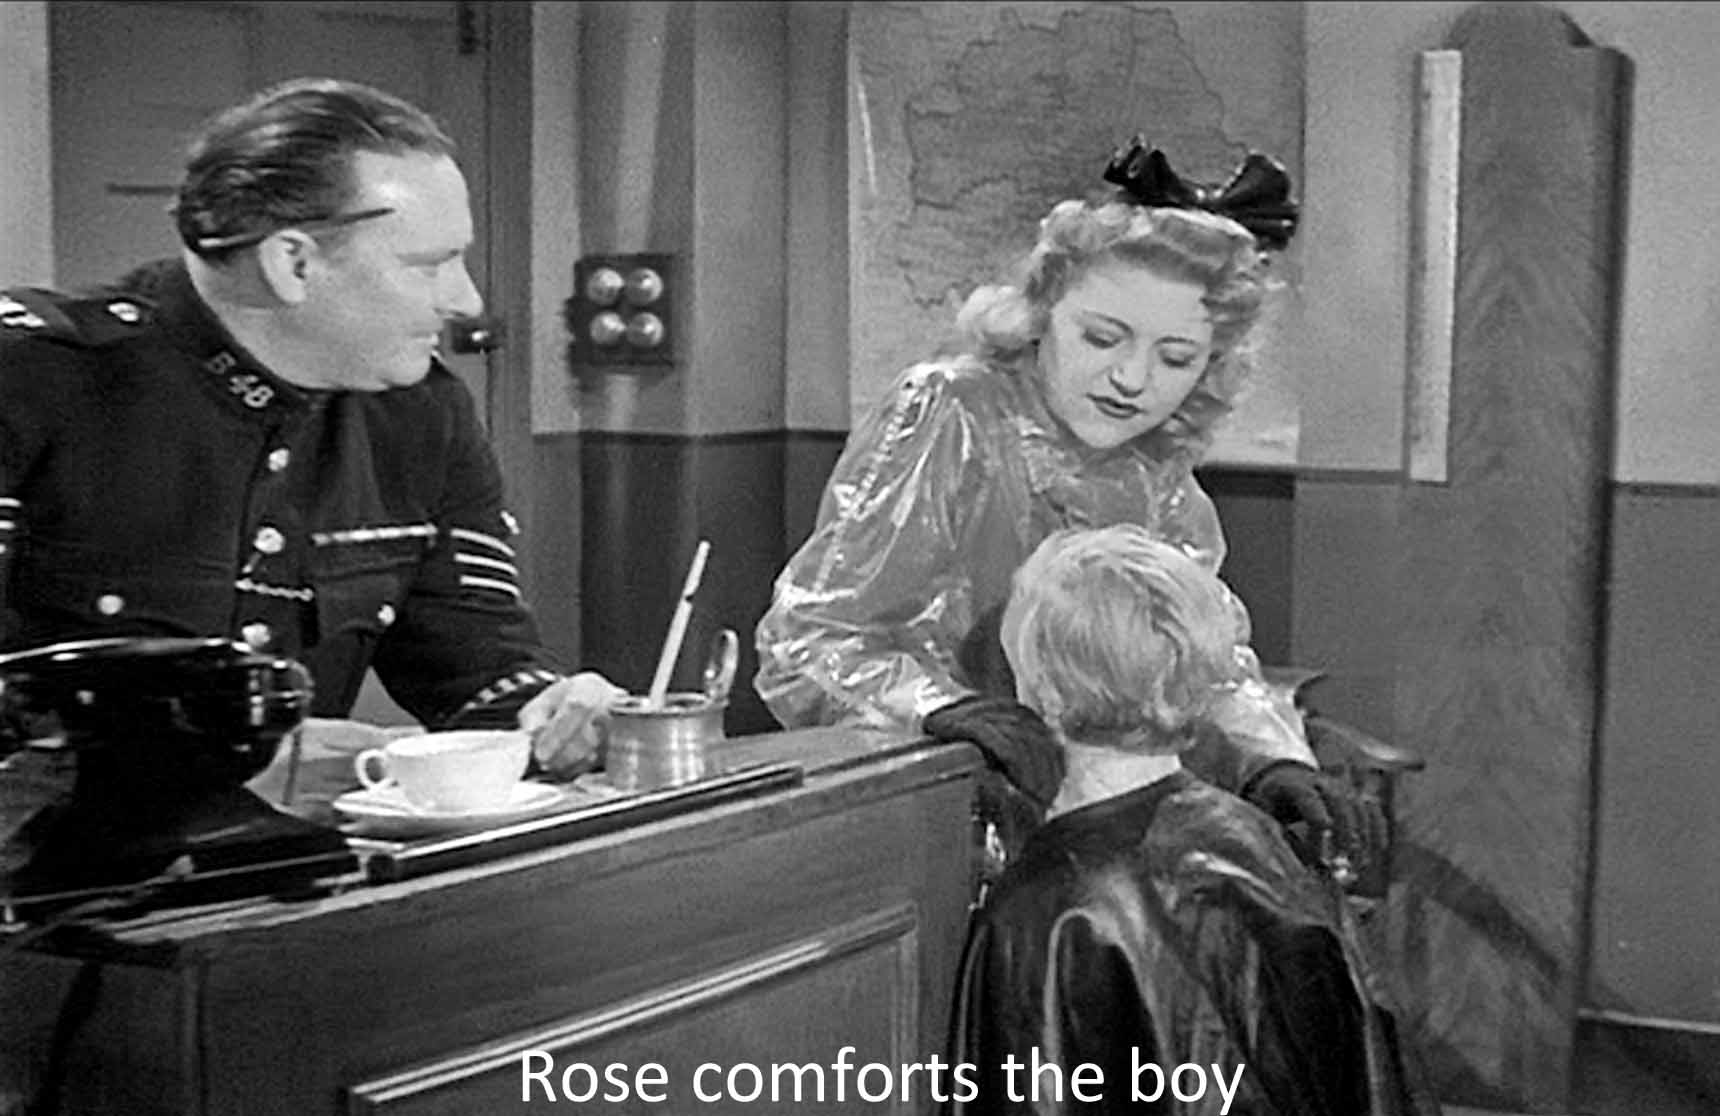 Rose comforts the boy